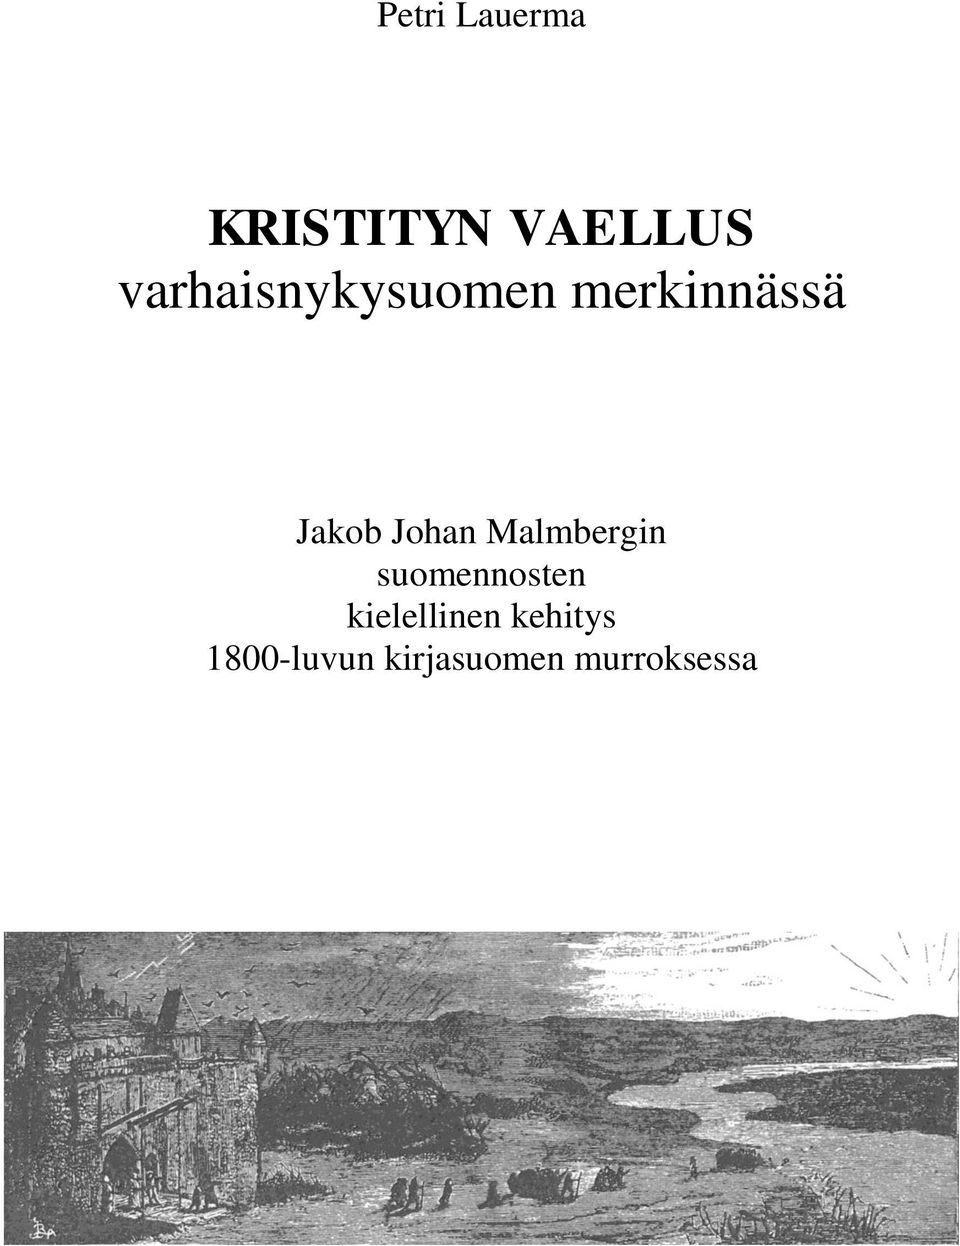 Johan Malmbergin suomennosten